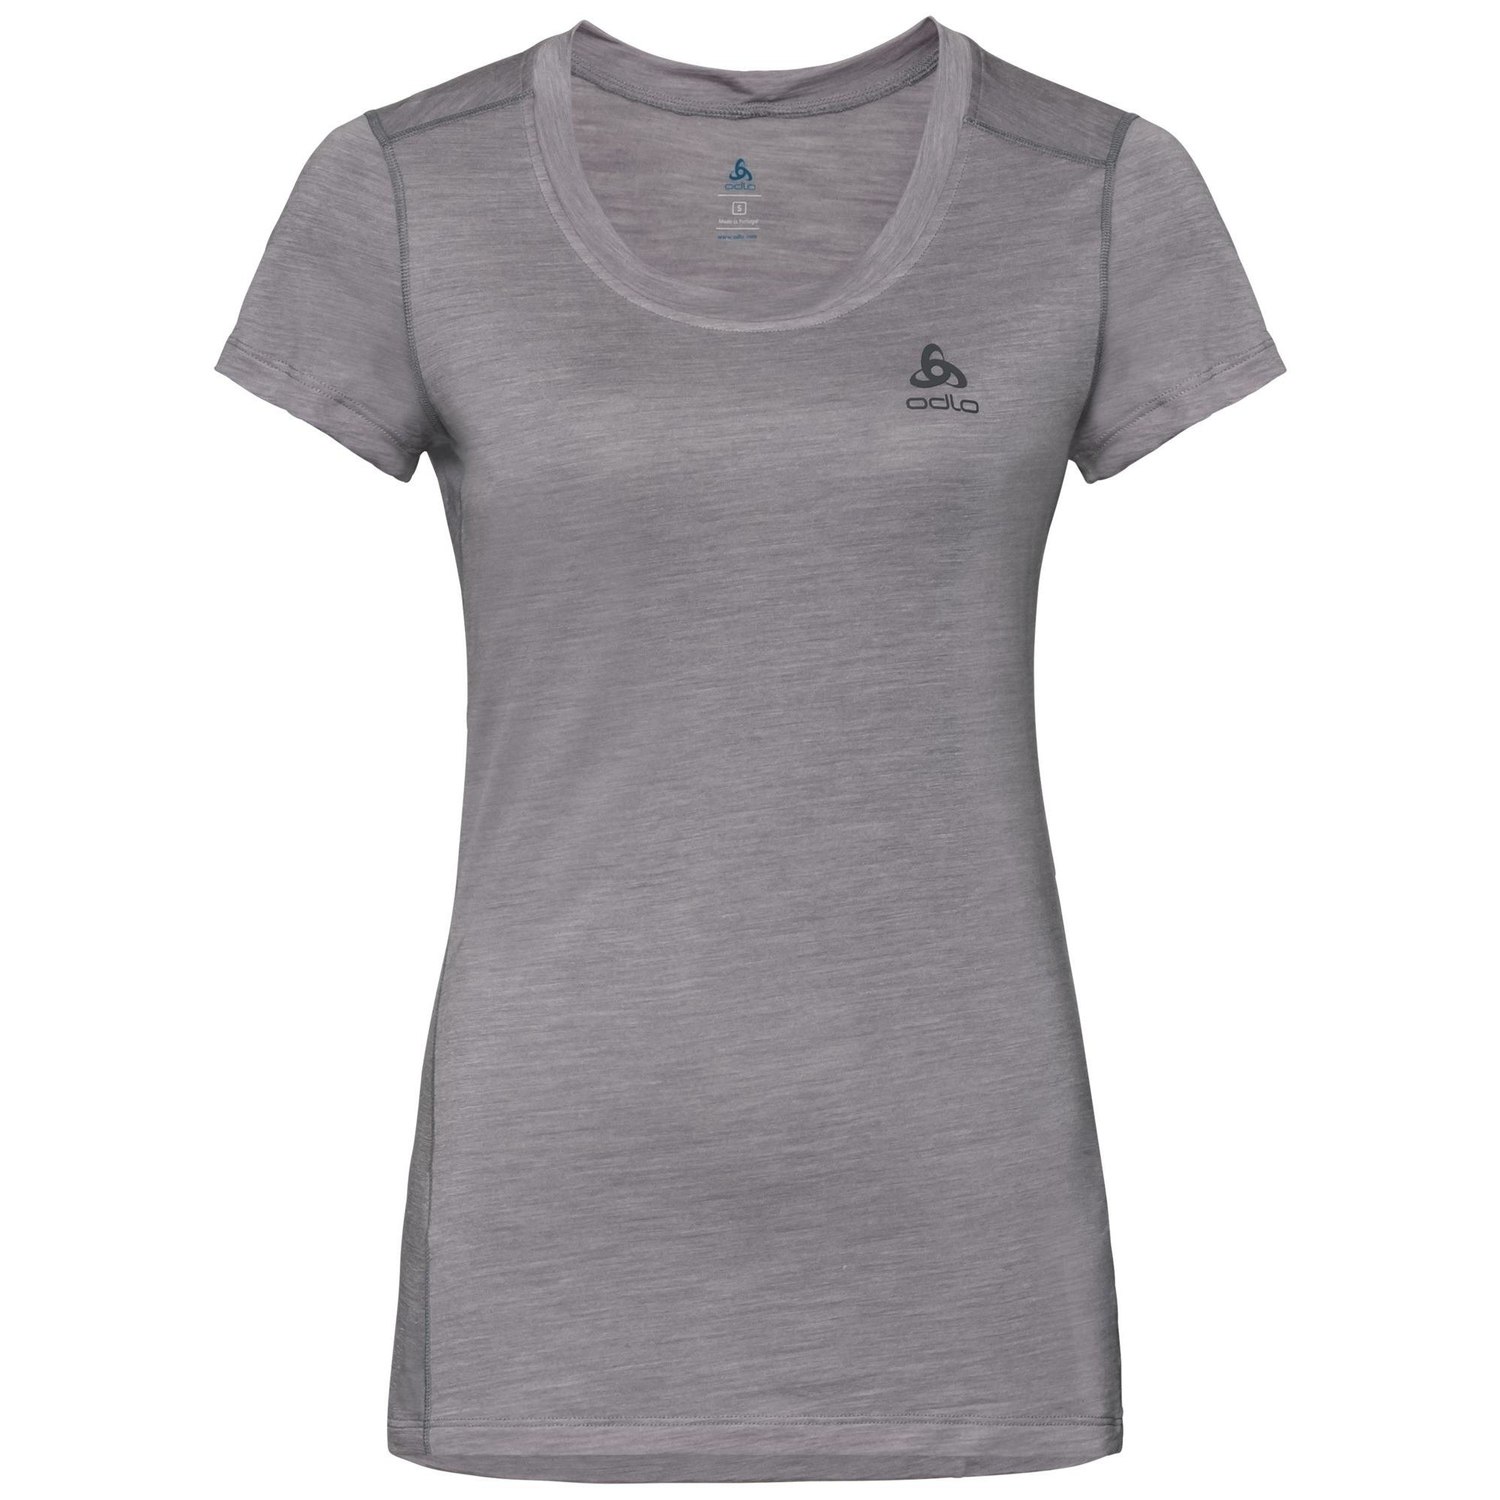 Bild von Odlo Performance Wool Light Base Layer T-Shirt Damen - grey melange